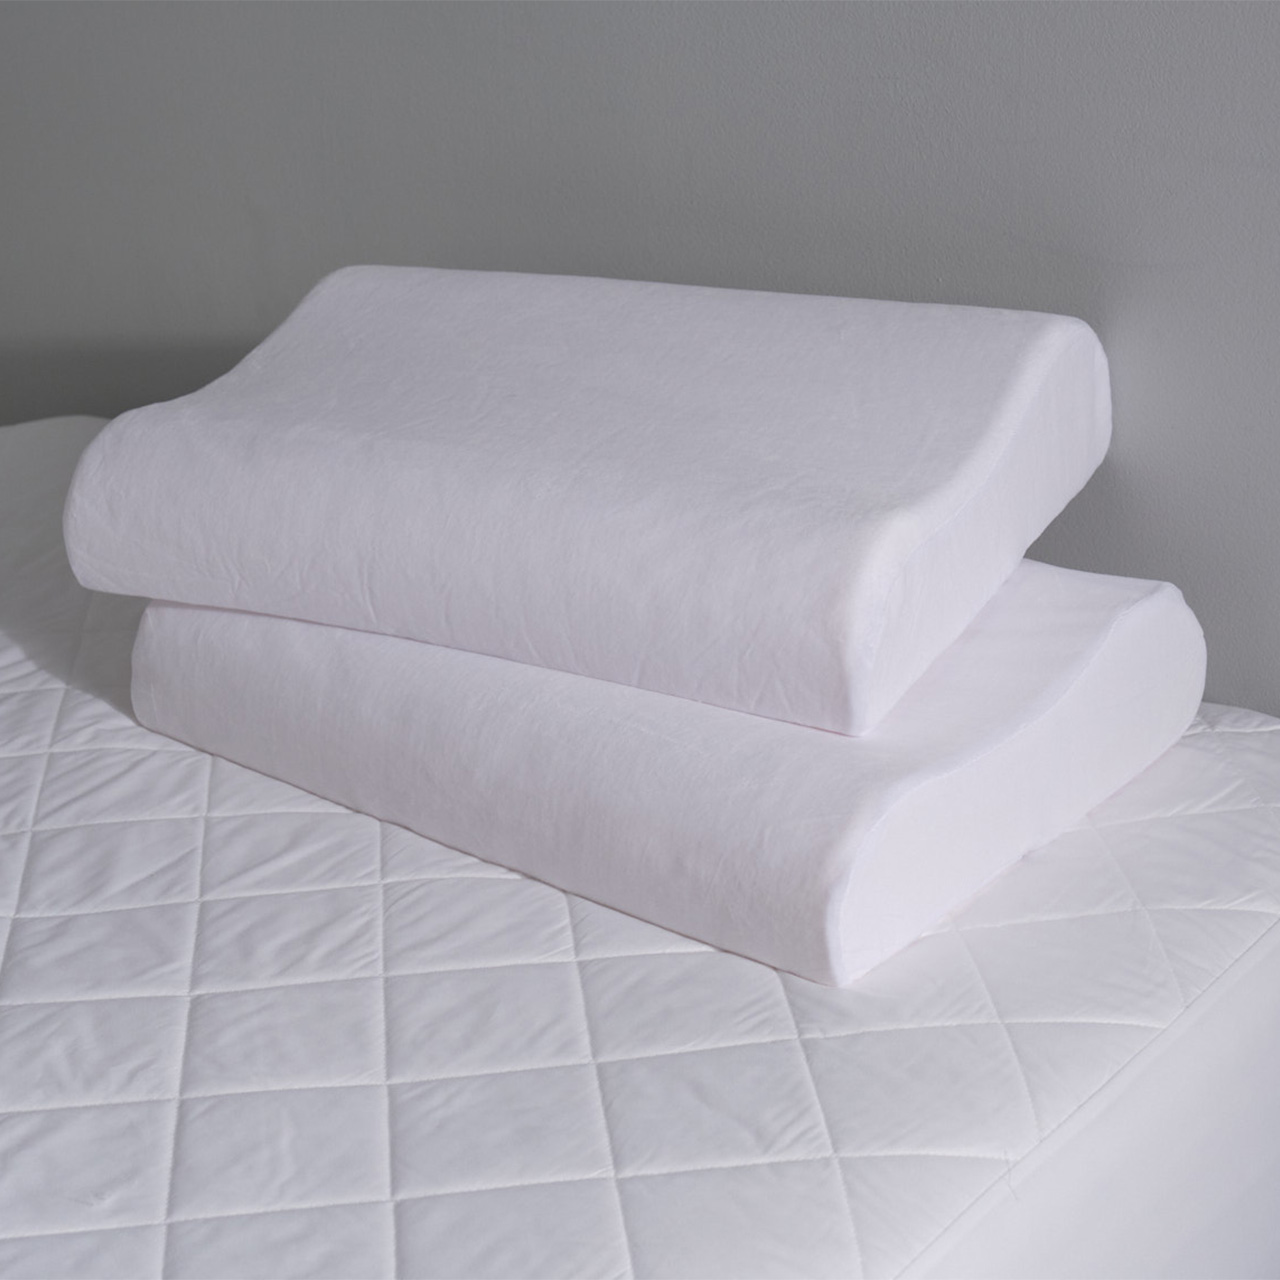 Contour Memory Foam Pillow Twin Pack